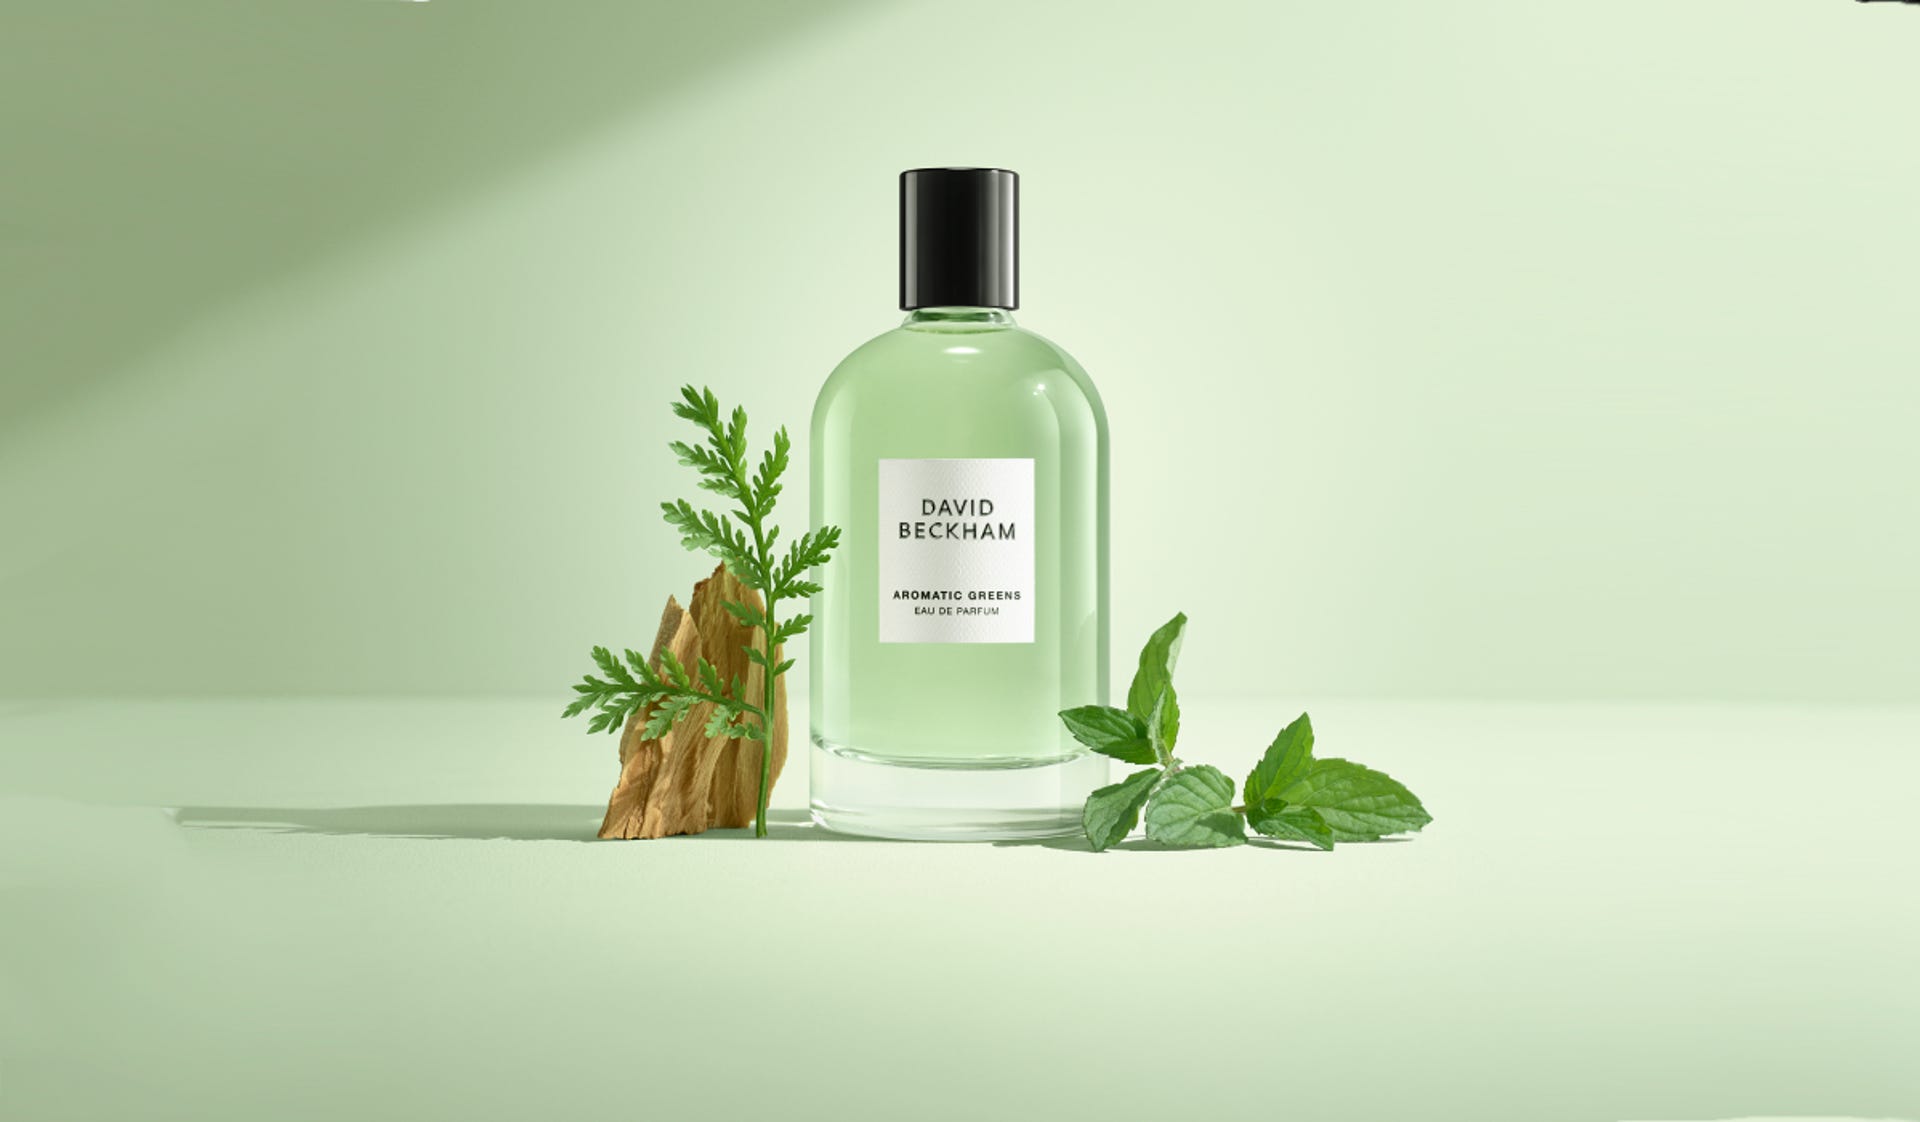 Aromatic Greens Eau de Parfum by David Beckham